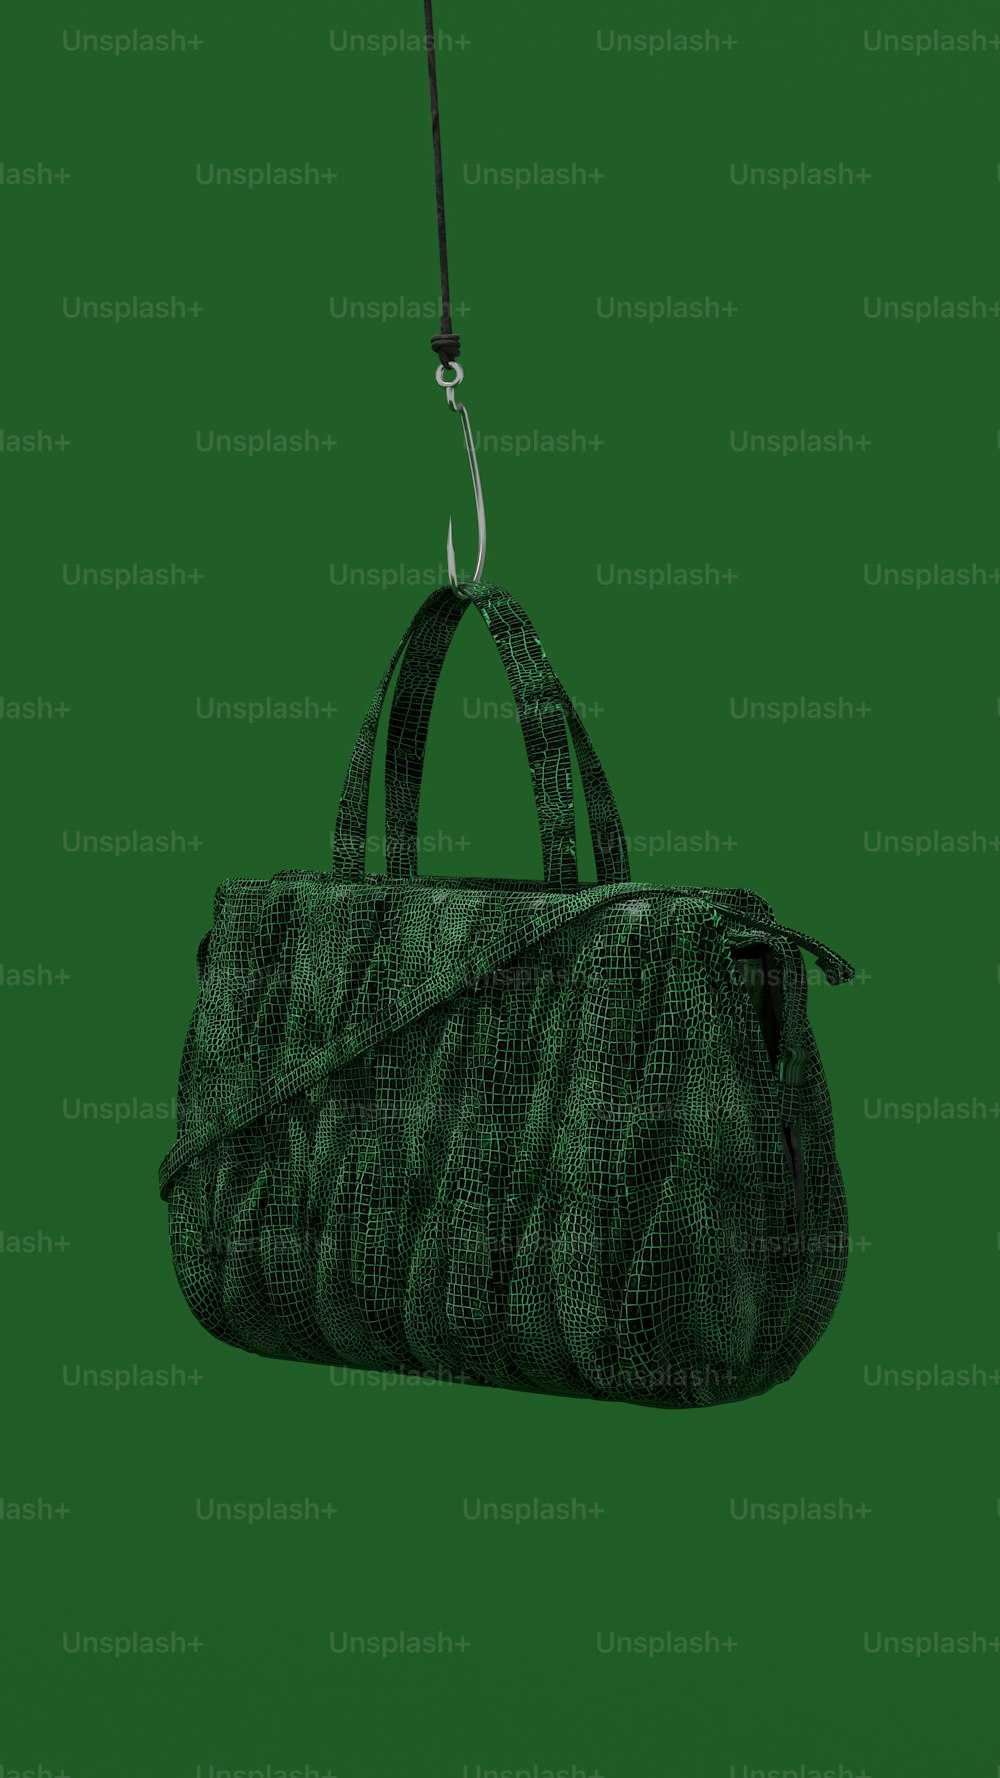 Red Supreme bag photo – Free Bag Image on Unsplash